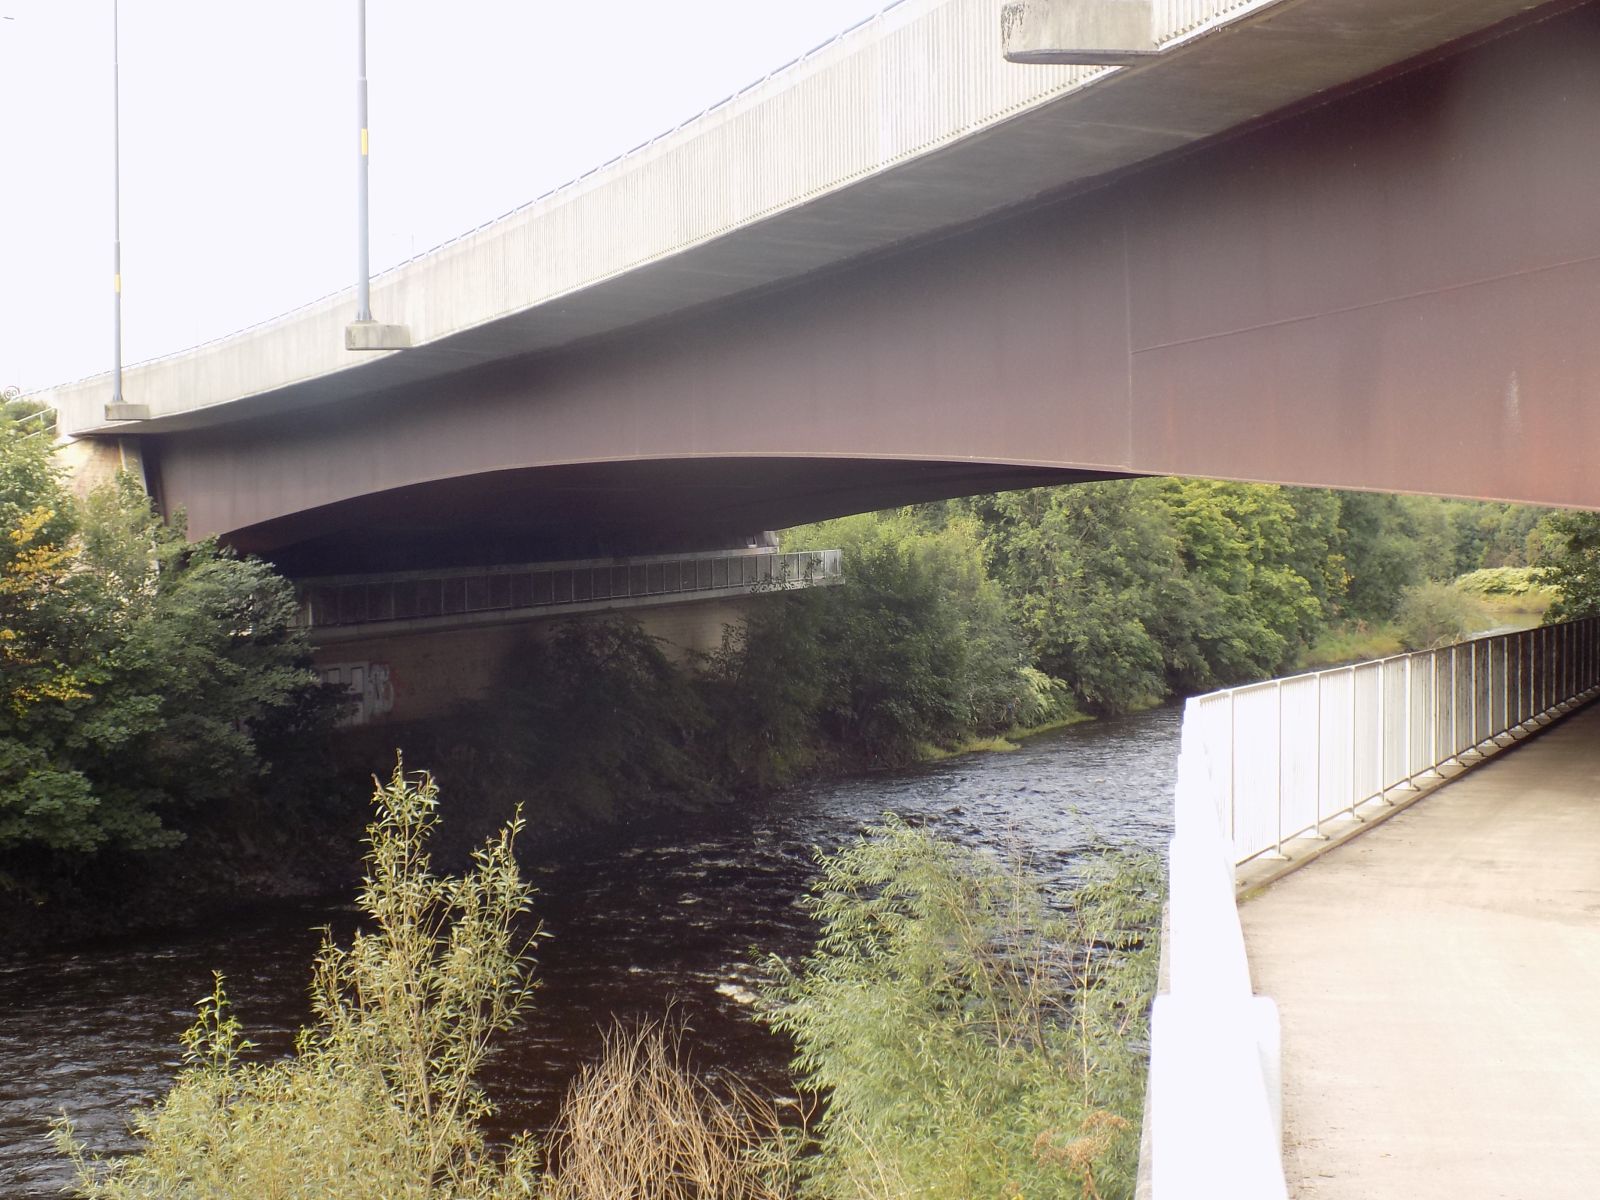 M74 Road bridge over the River Clyde